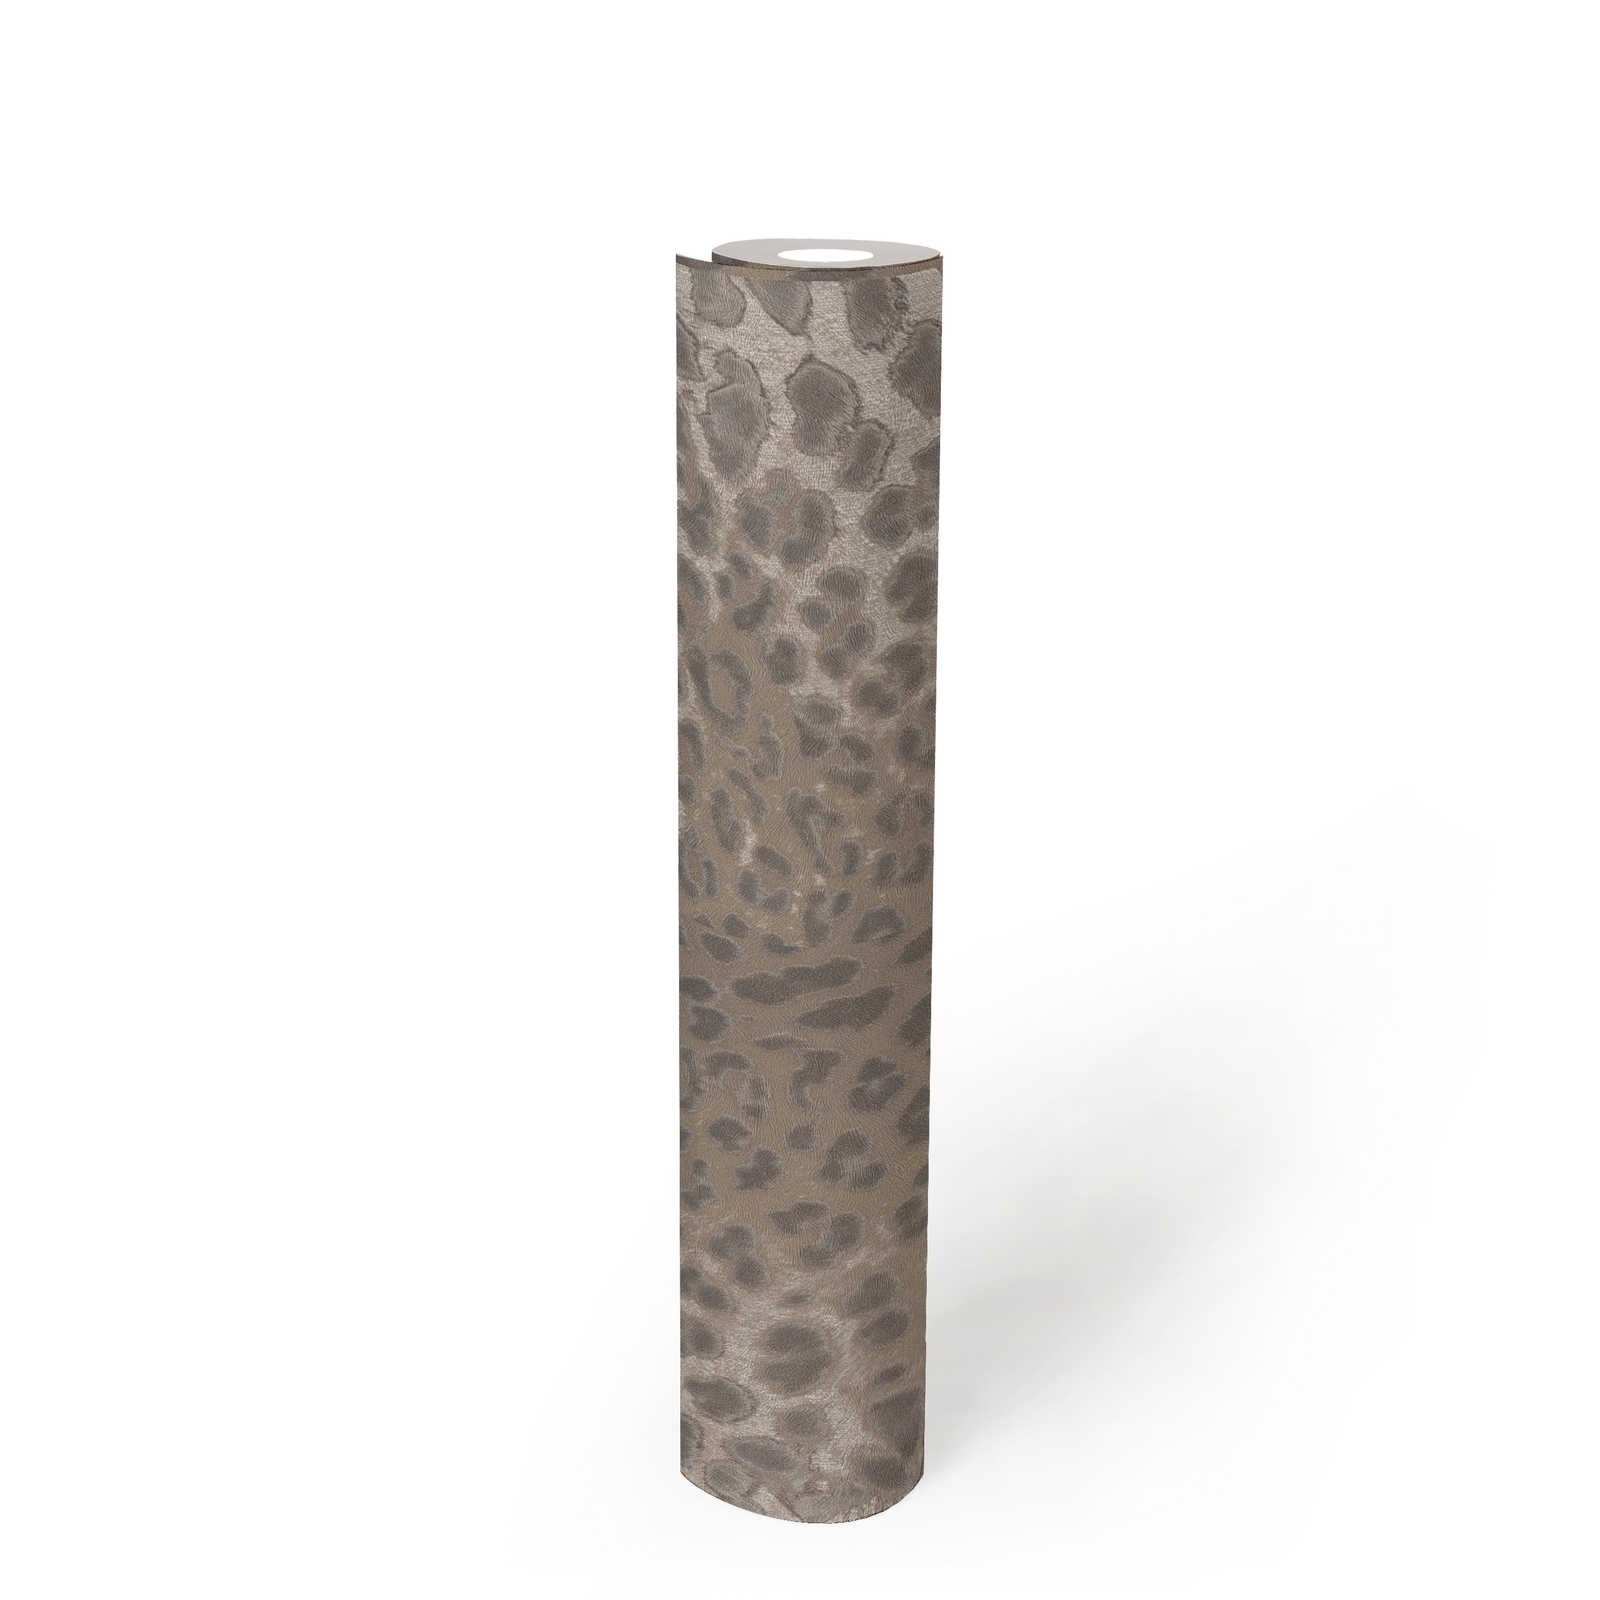             Tapete Animal Print Leopardenmuster – Beige, Metallic
        